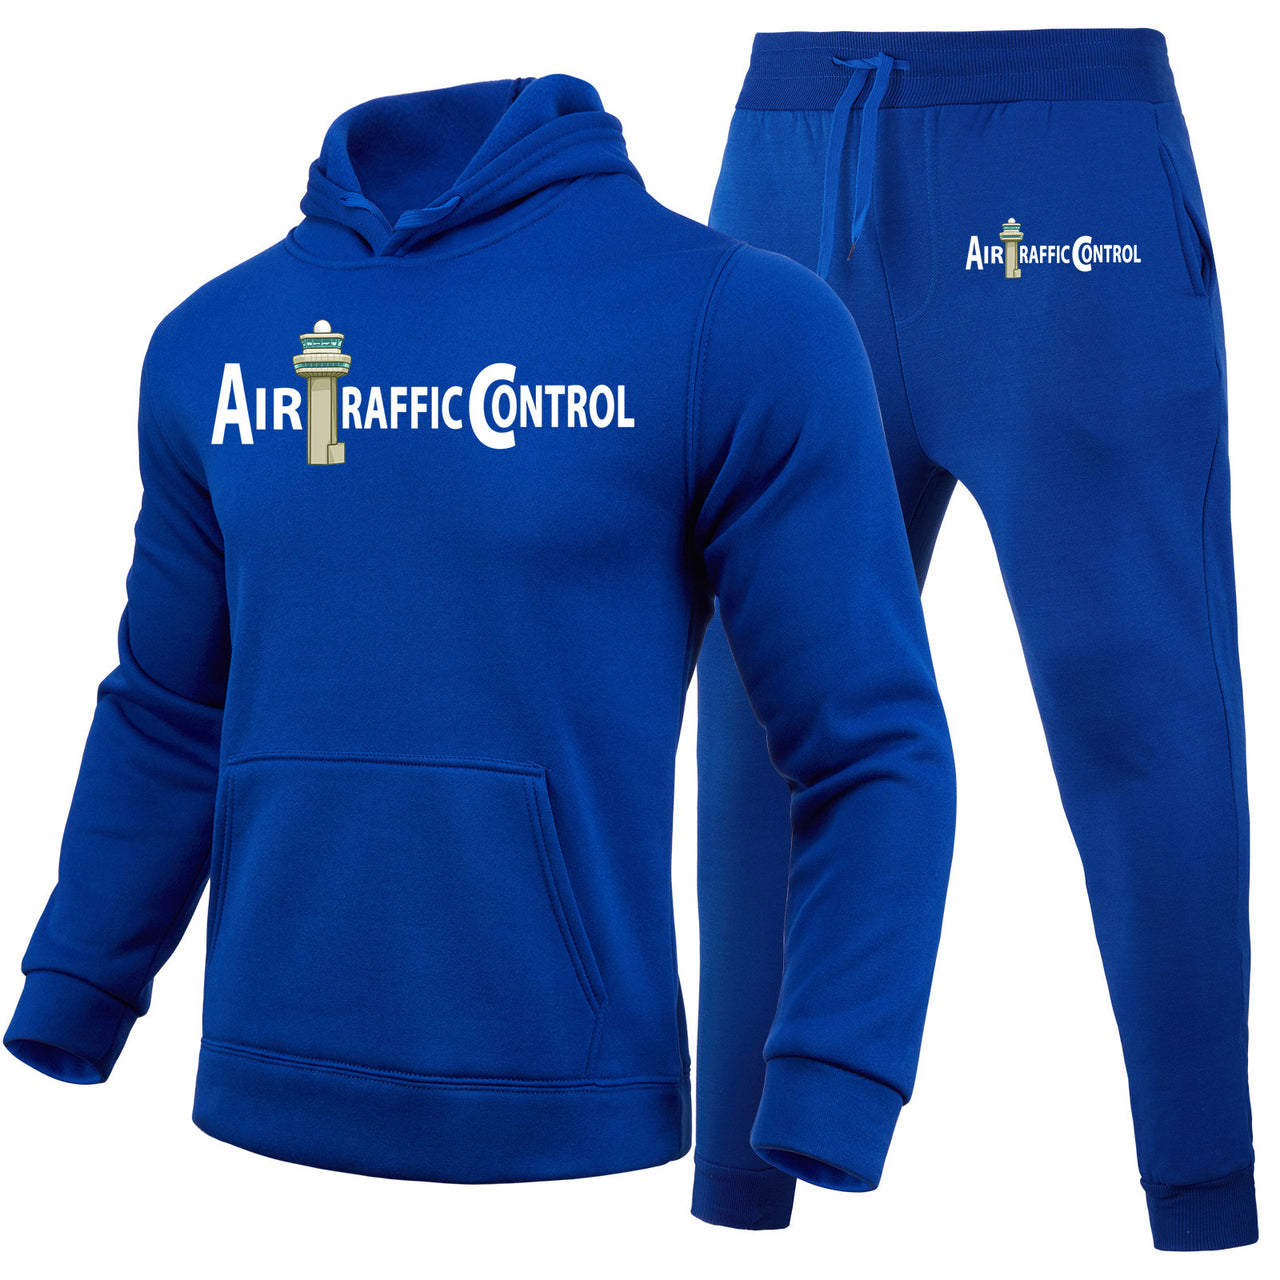 Air Traffic Control Designed Hoodies & Sweatpants Set